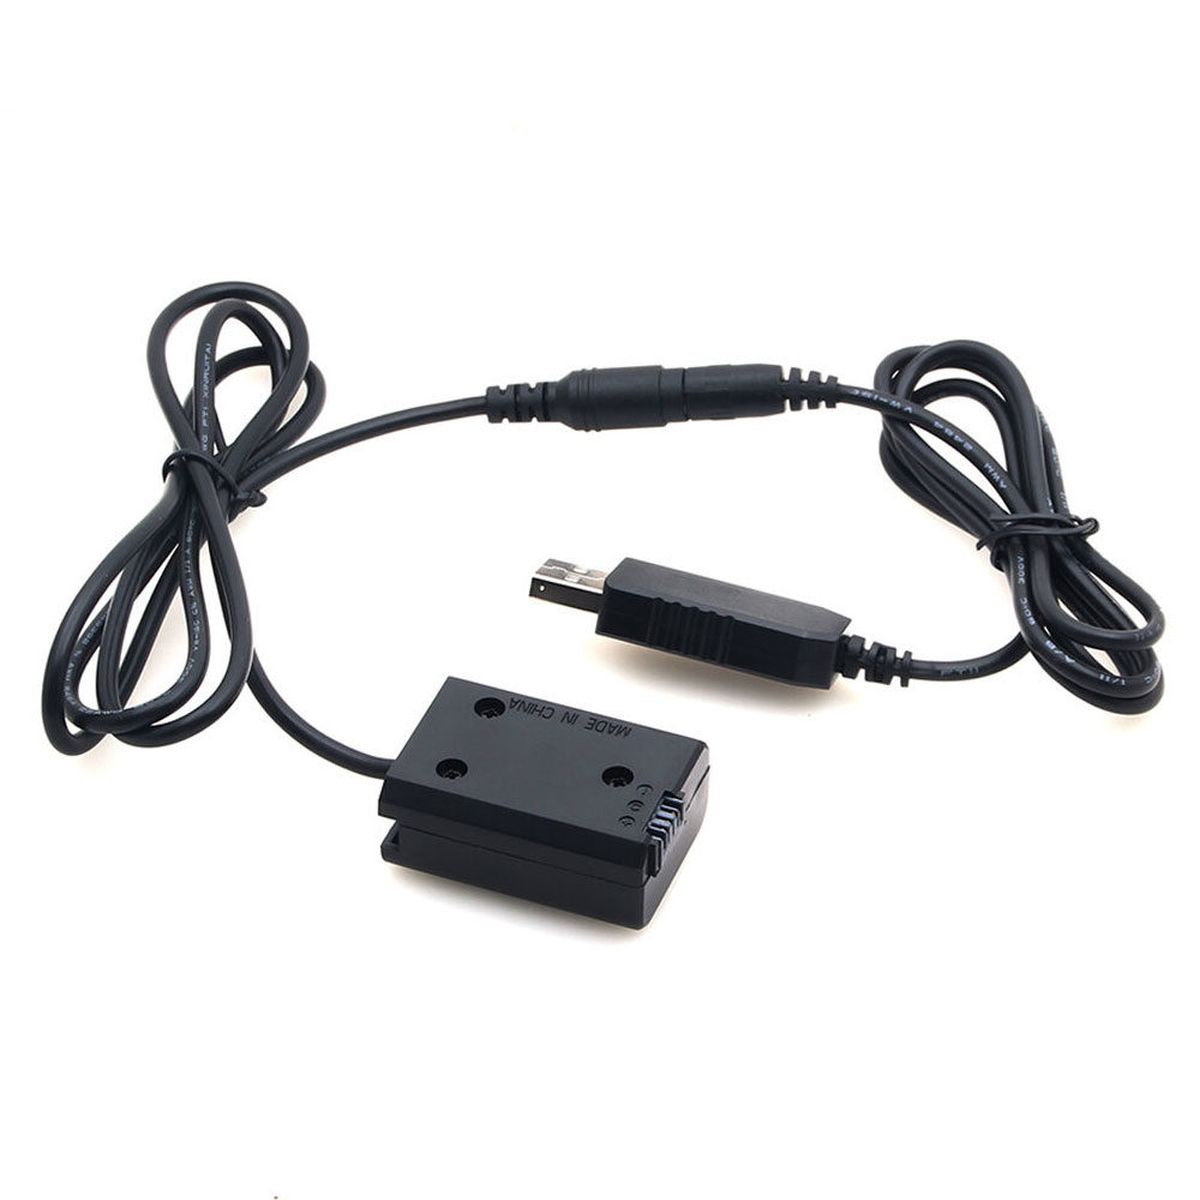 Caruba Volldecodierungs-Akku-Dummy für Sony NP-FW50 und 5V 2A Einzel-USB-Kabel